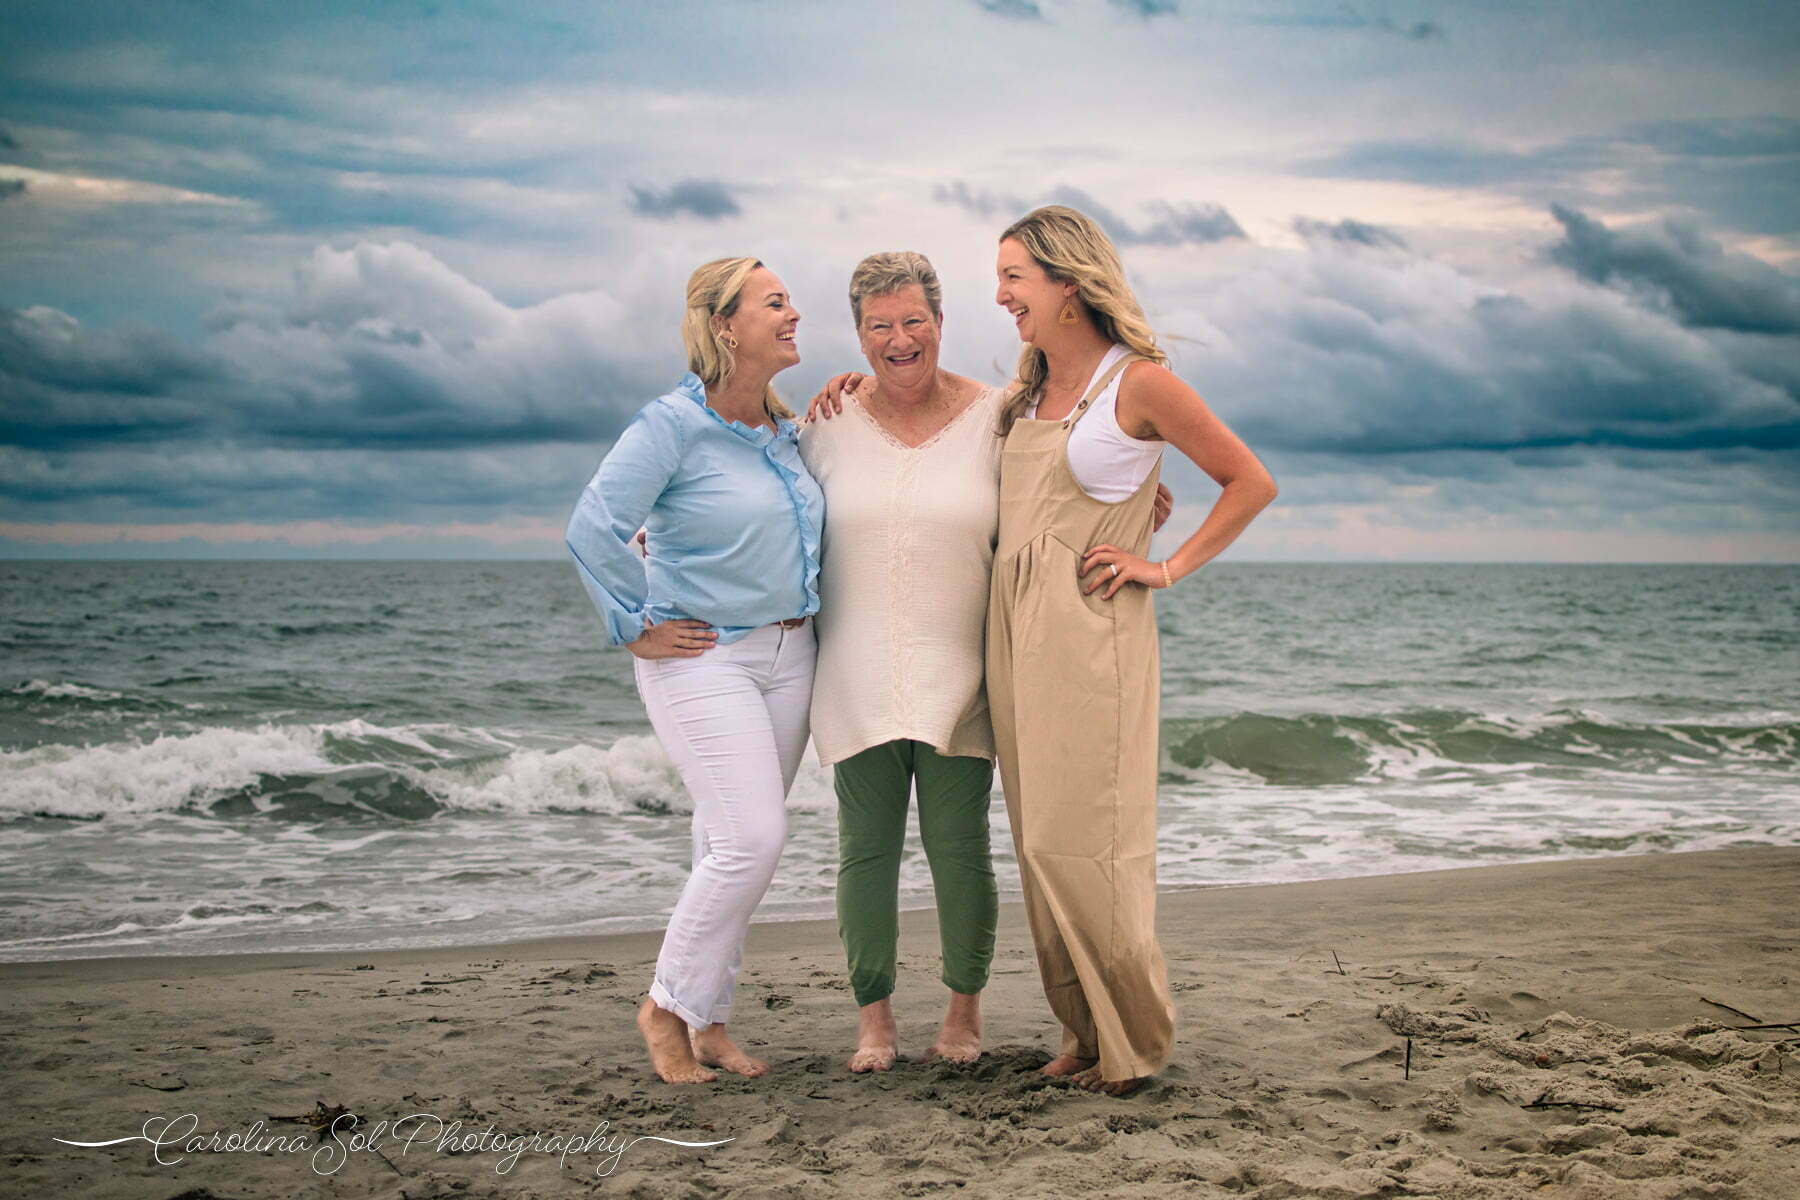 Ocean Isle Beach, NC extended family lifestyle photography.